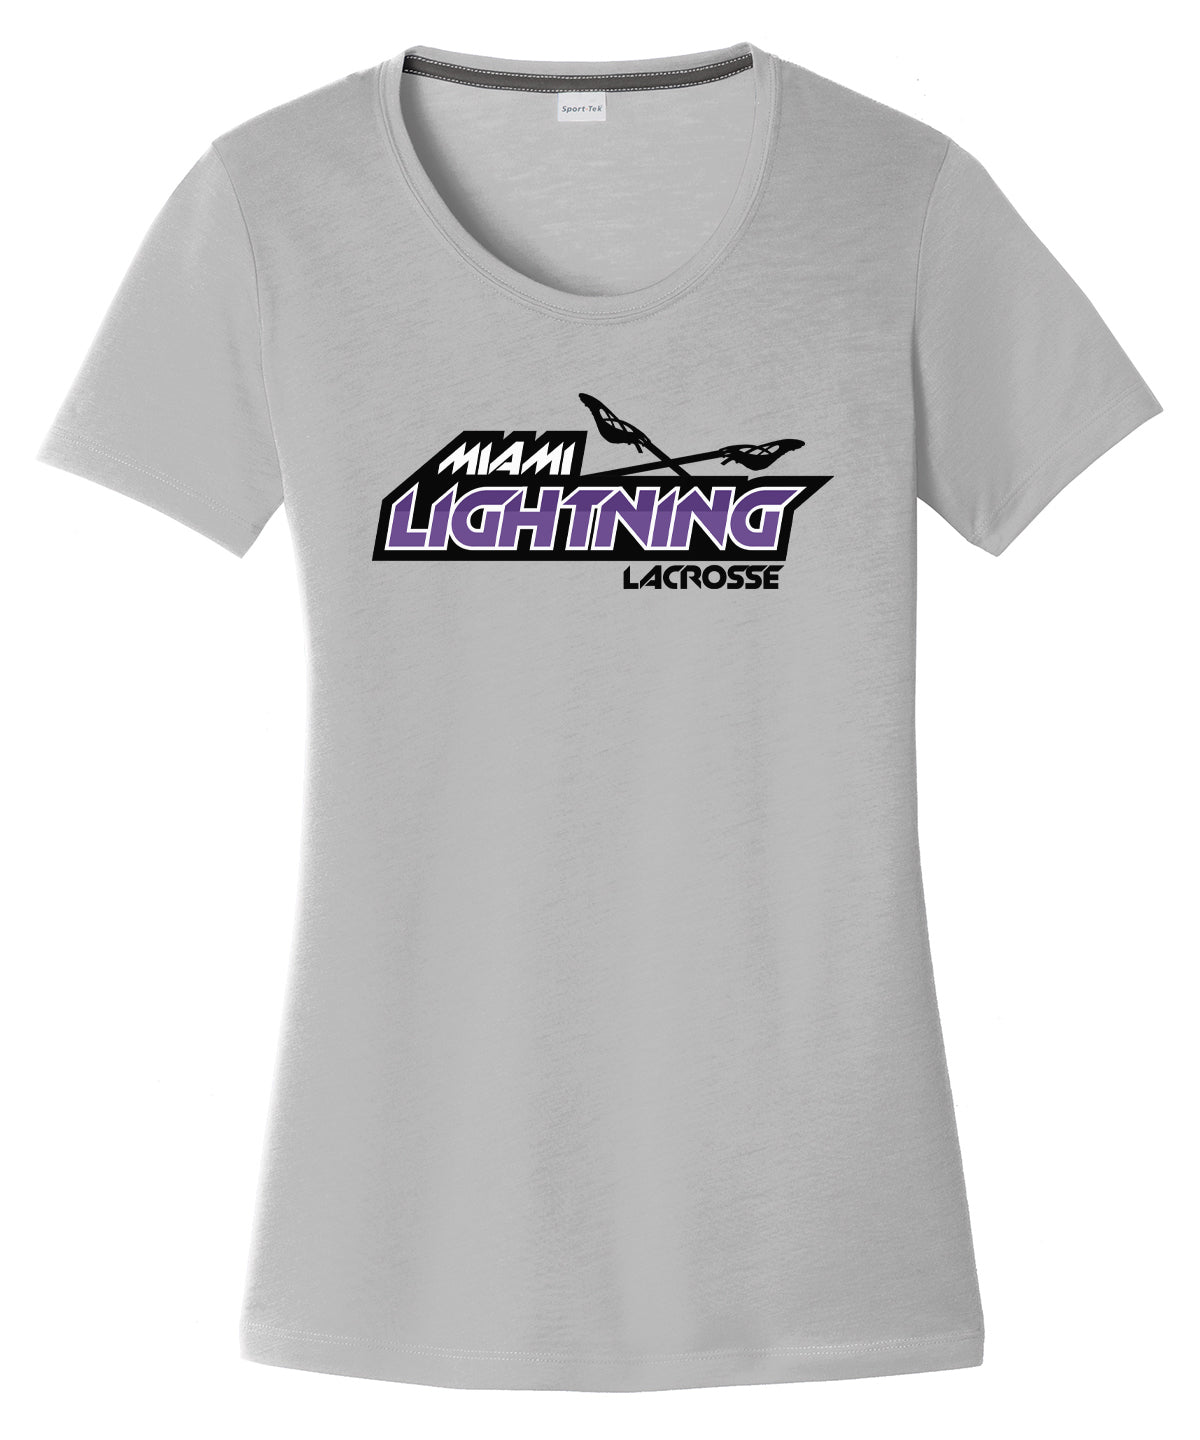 Miami Lightning Women's CottonTouch Performance T-Shirt